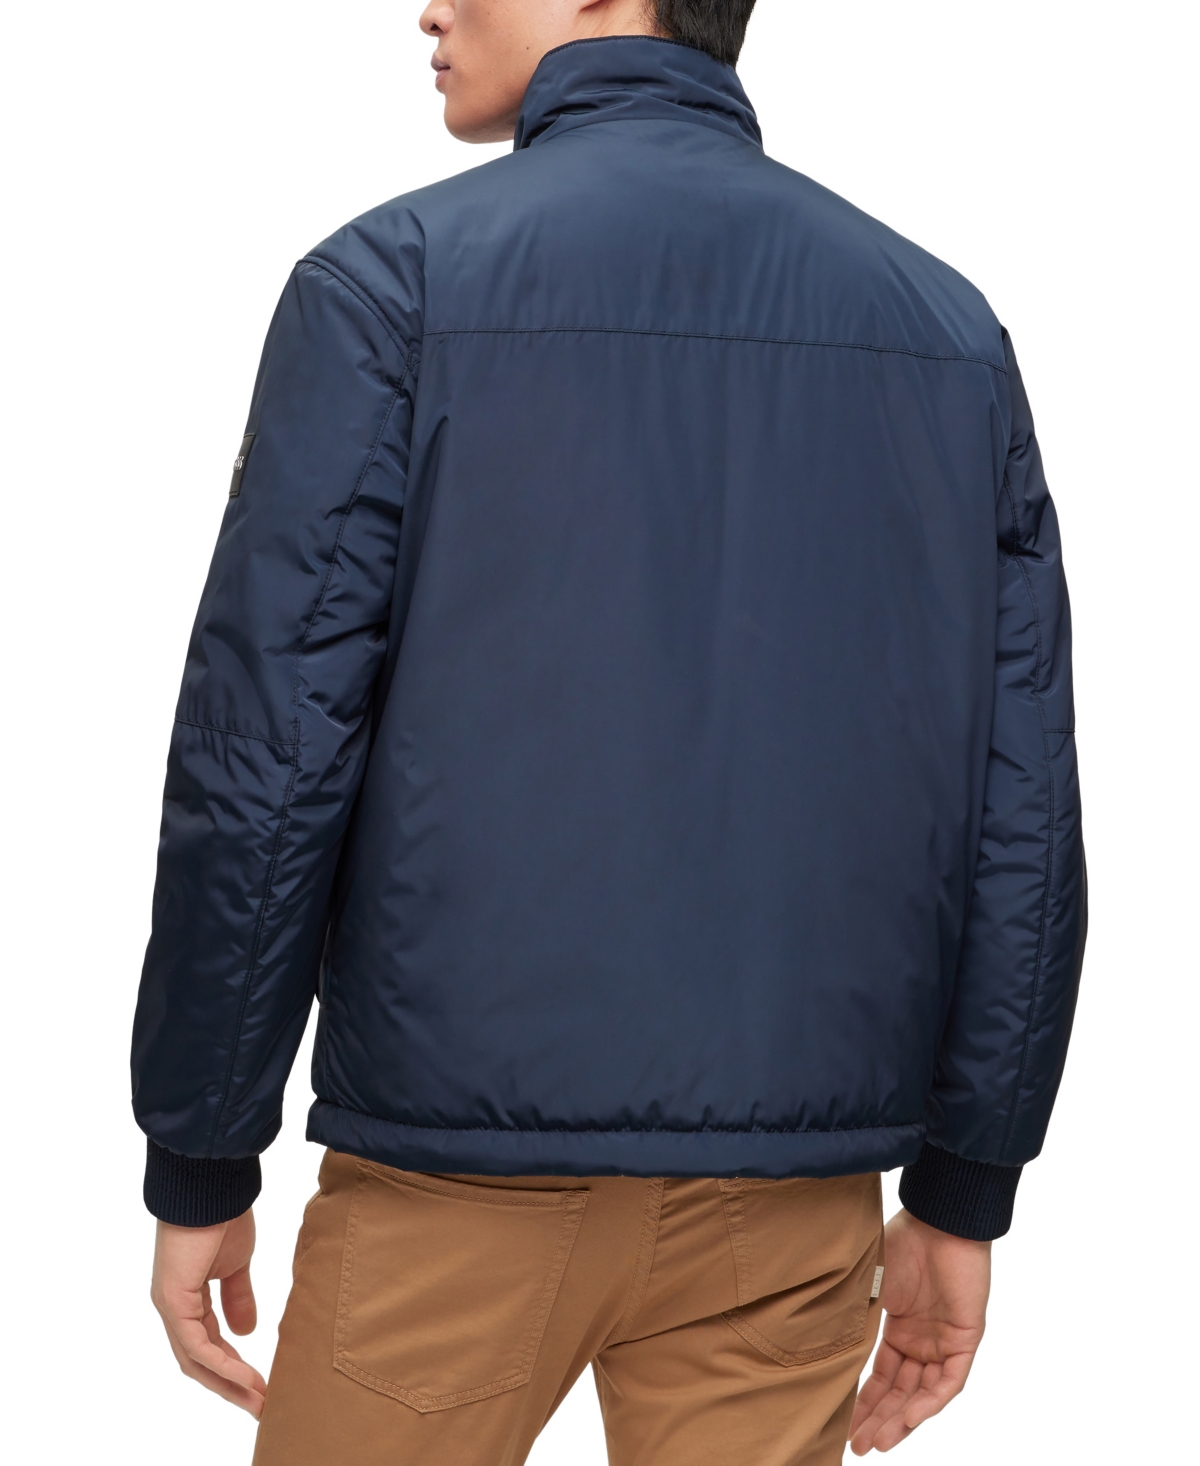 Hugo Boss Men's Reversible Windbreaker Jacket